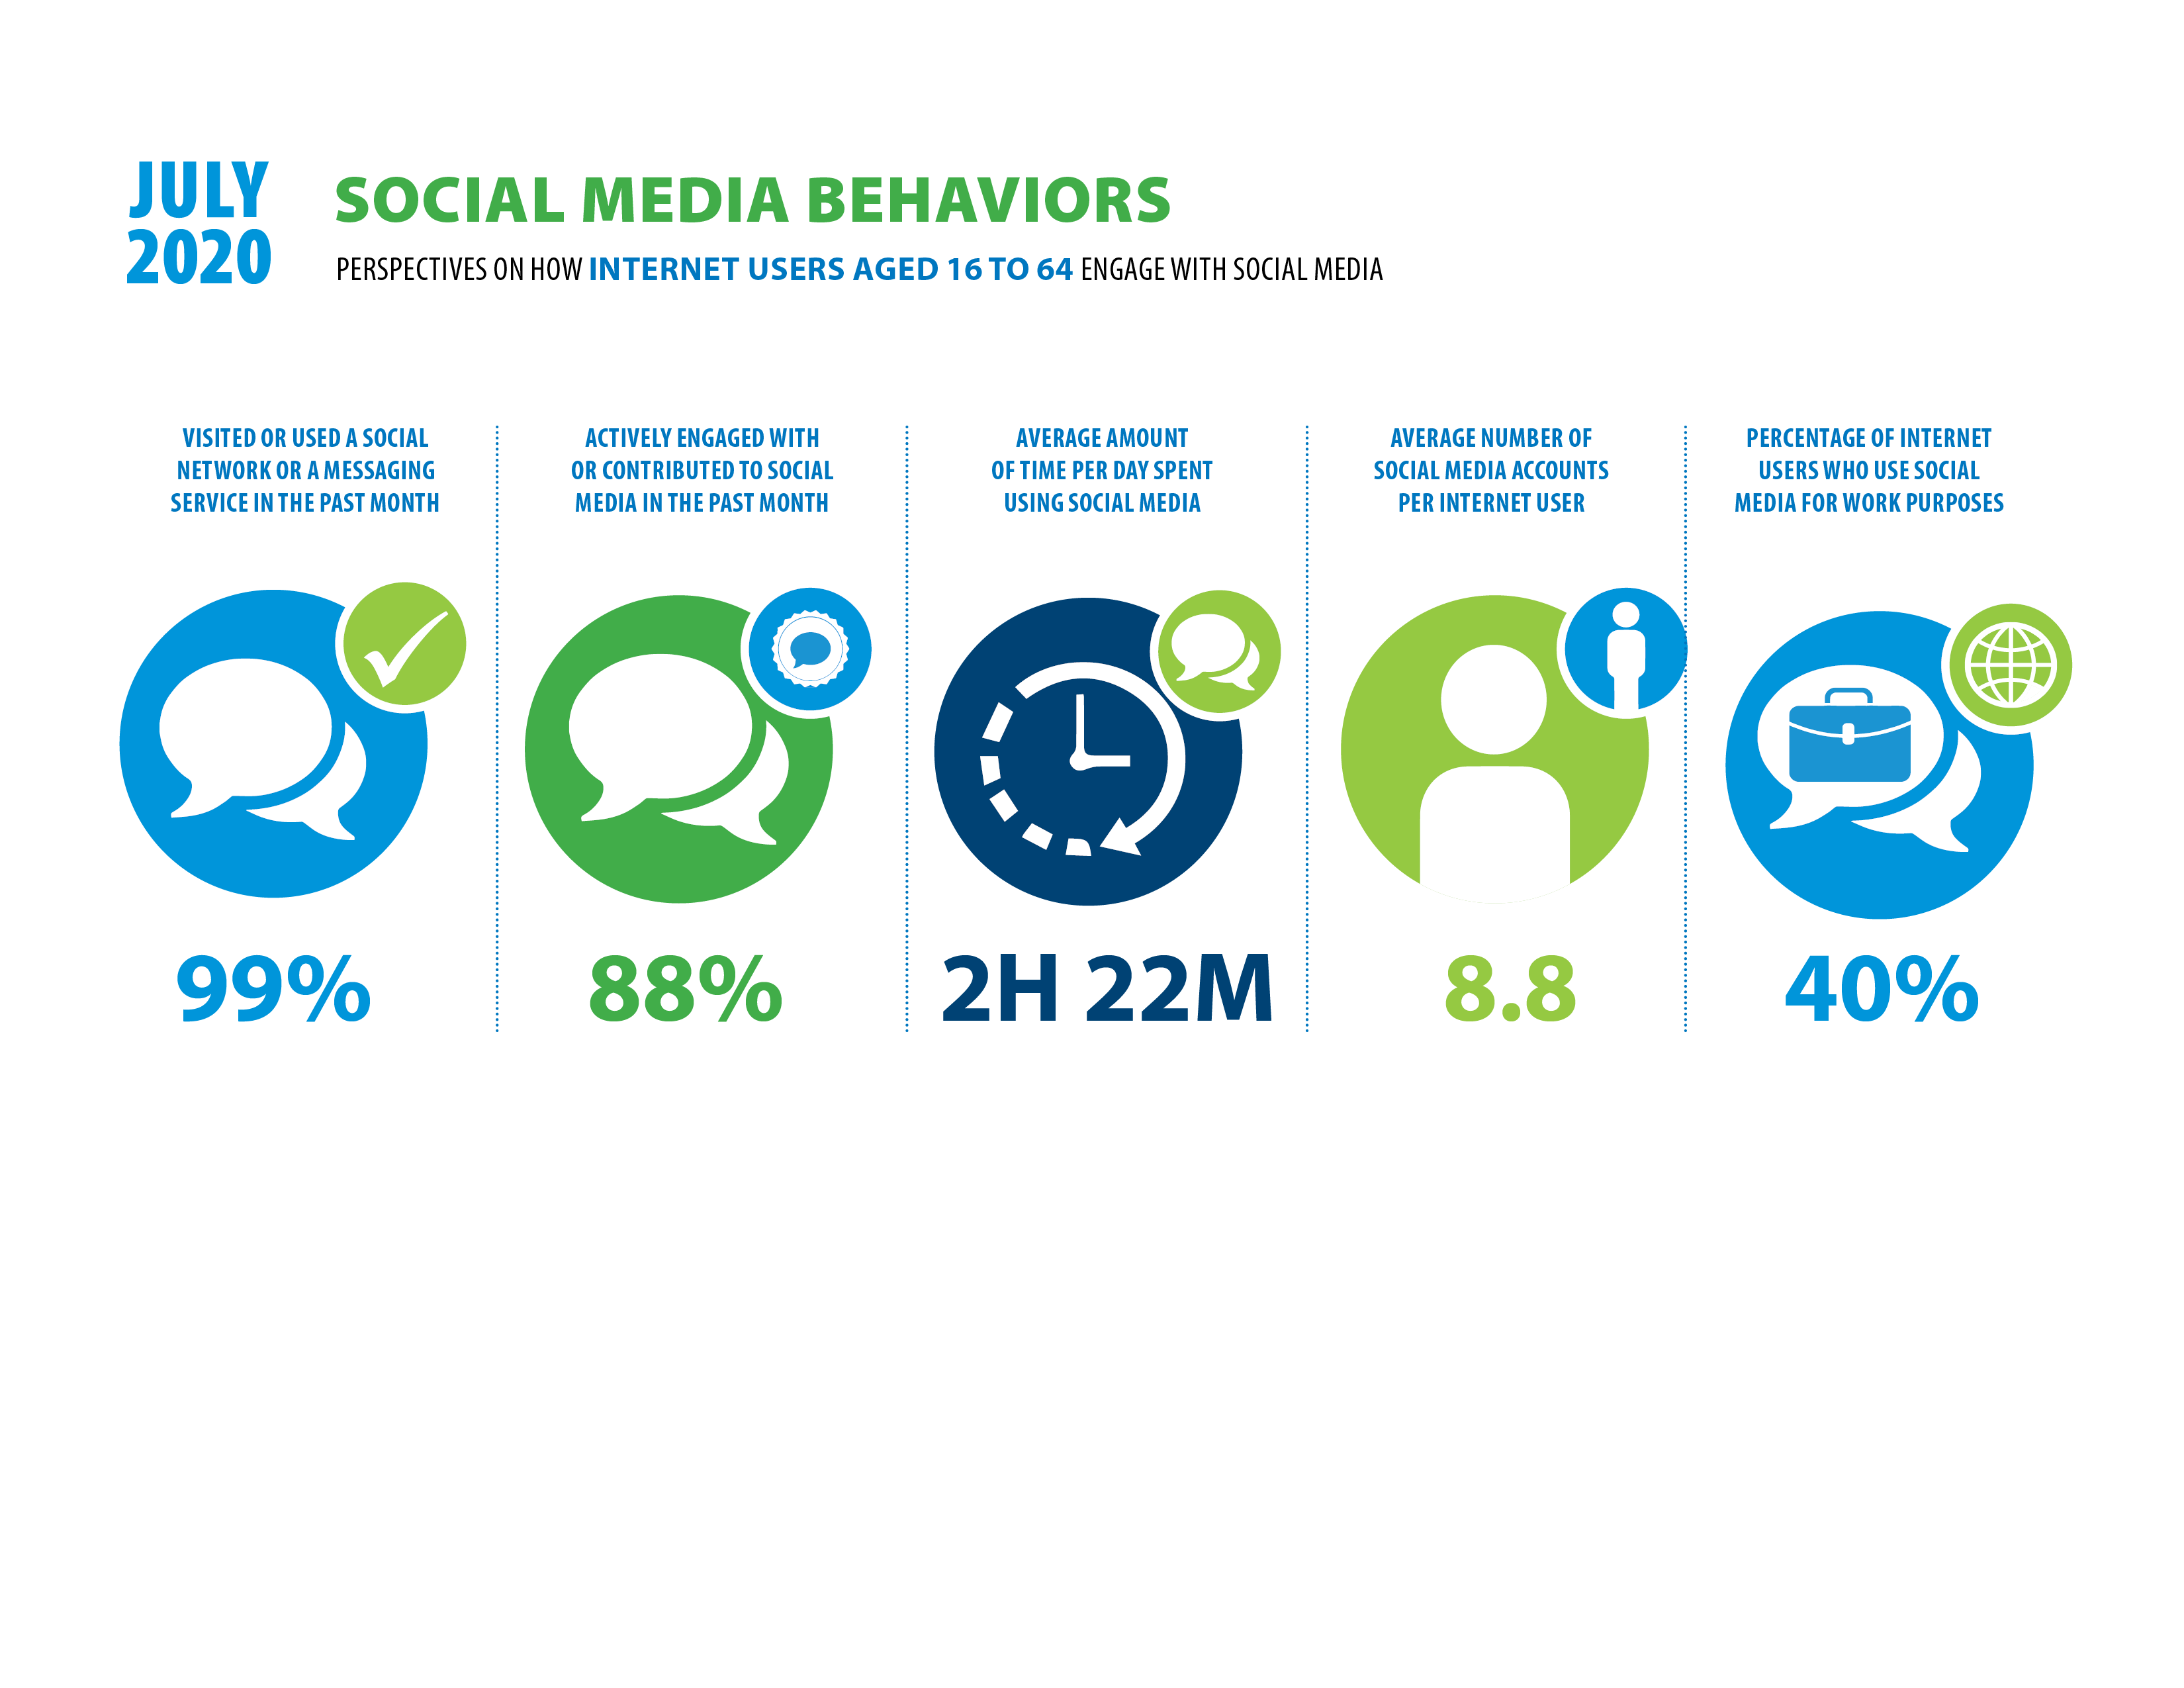 Social Media Usage Statistics in 2021